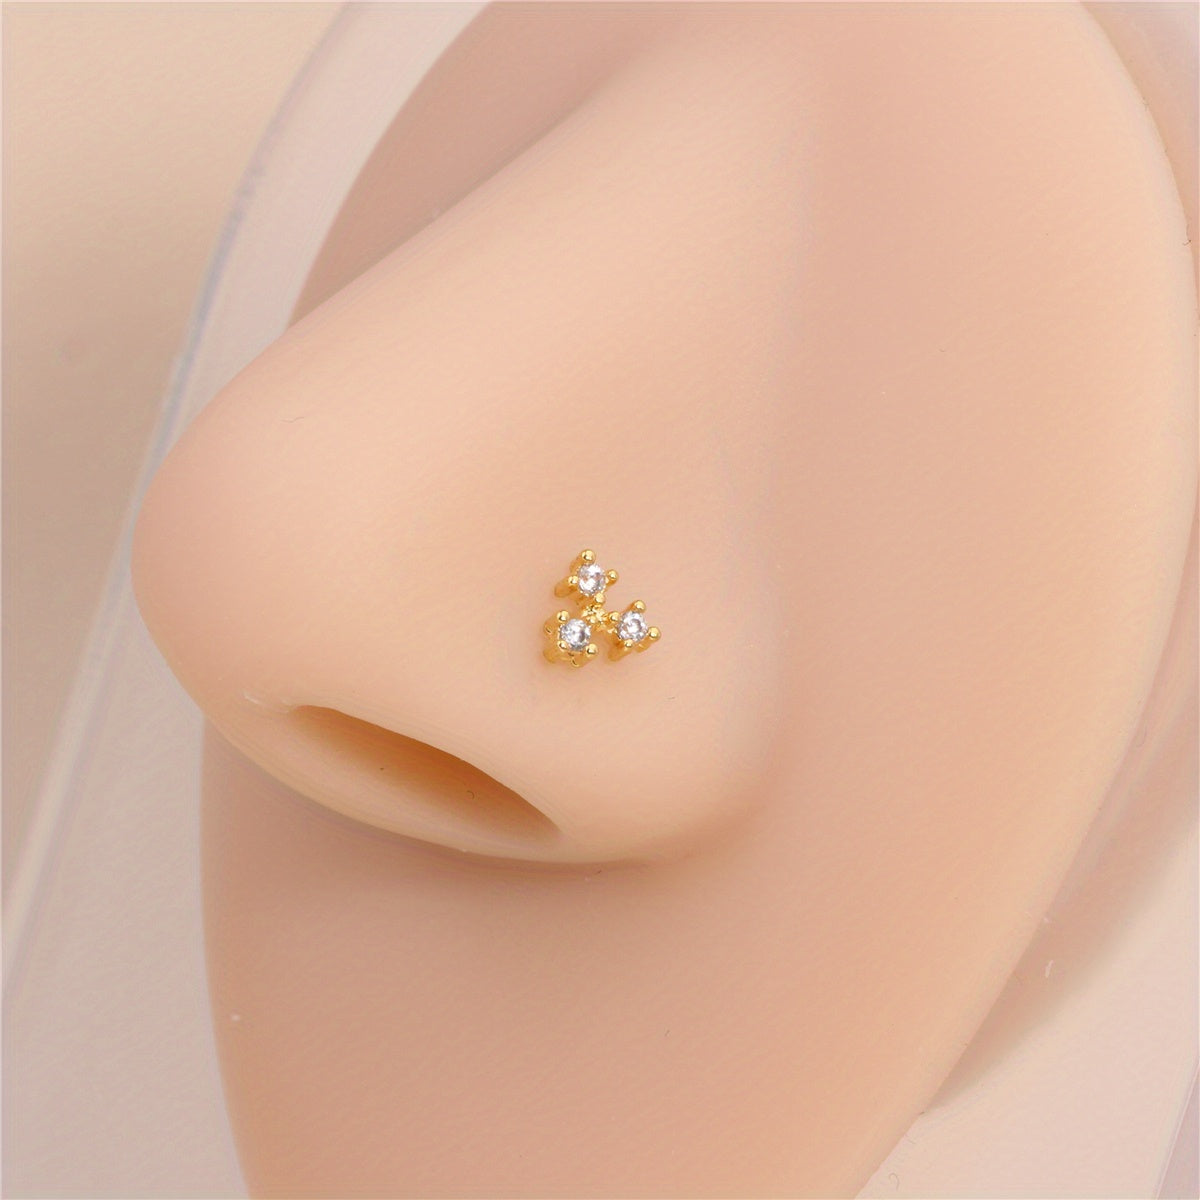 1Pcs Nose Rings Studs For Women Men L Shape Body Piercing Jewelry